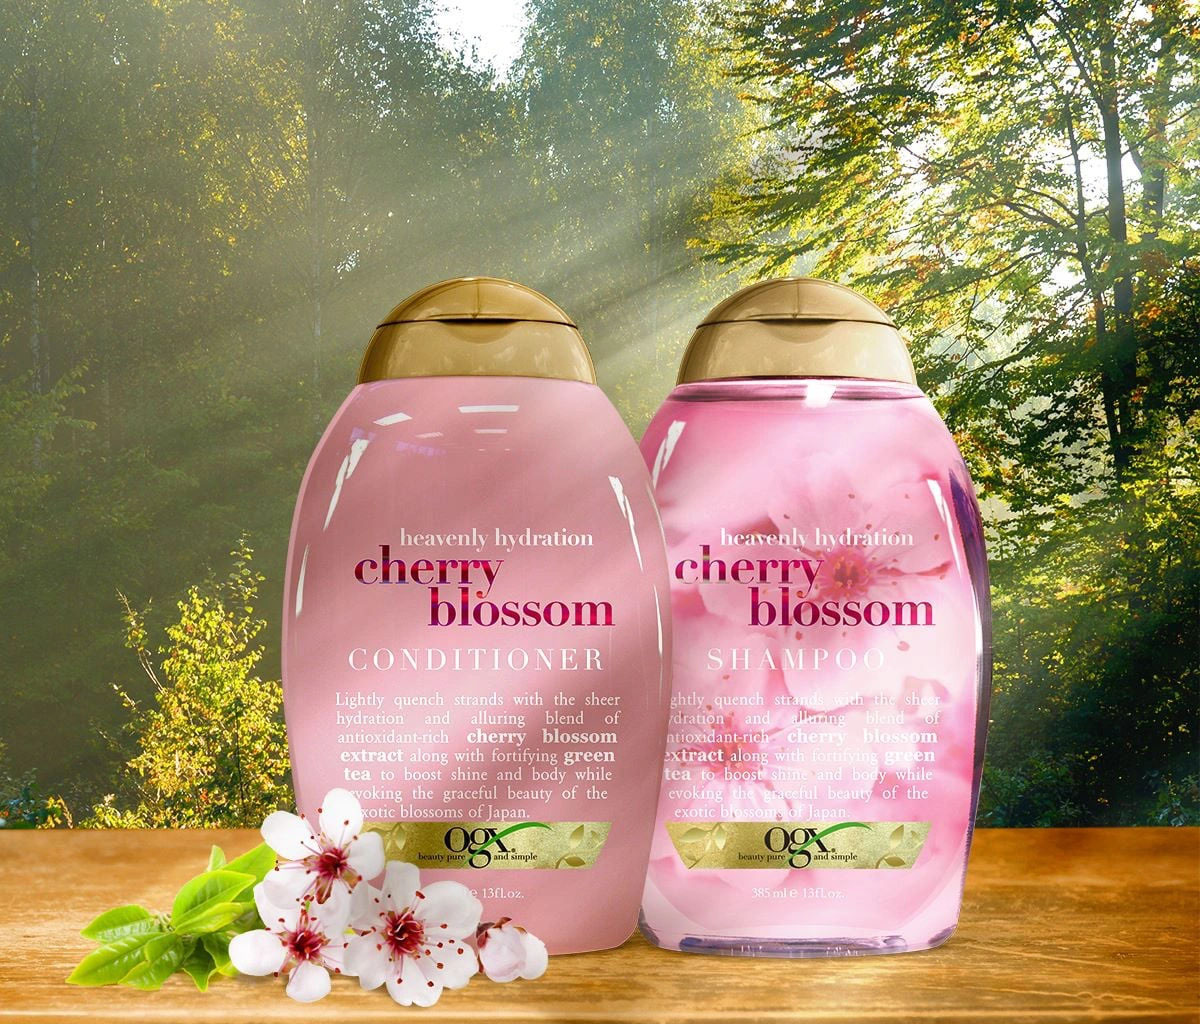 OGX Heavenly Hydration + Cherry Blossom Conditioner